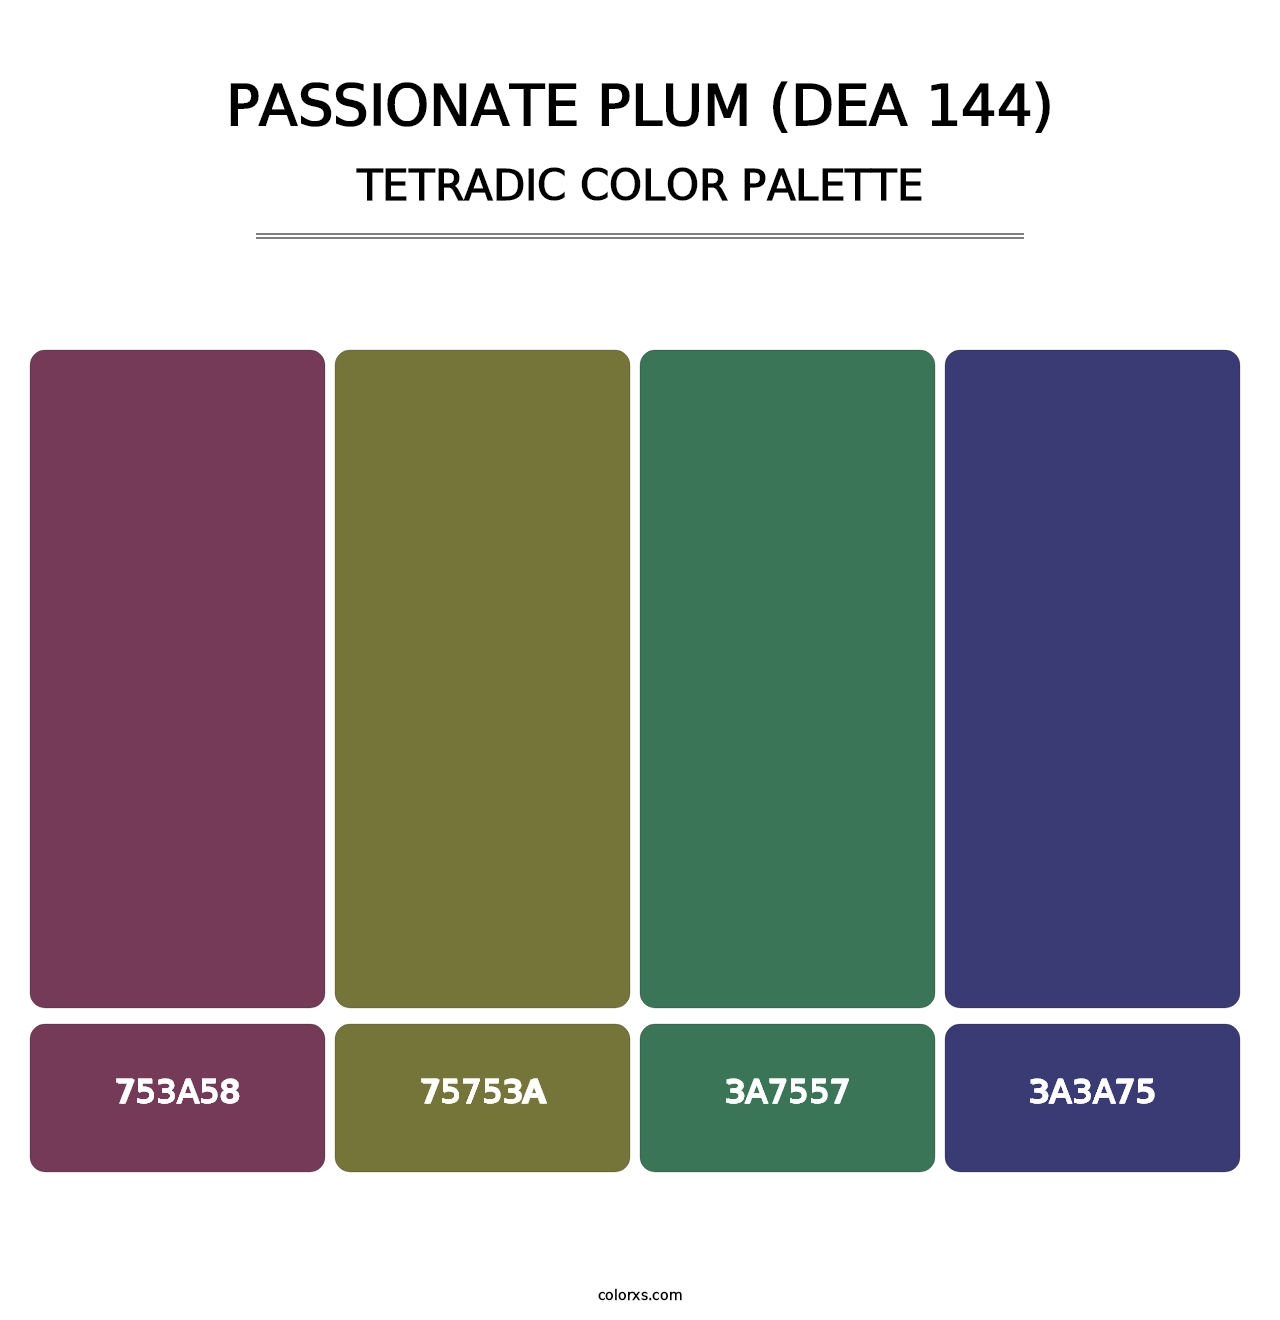 Passionate Plum (DEA 144) - Tetradic Color Palette